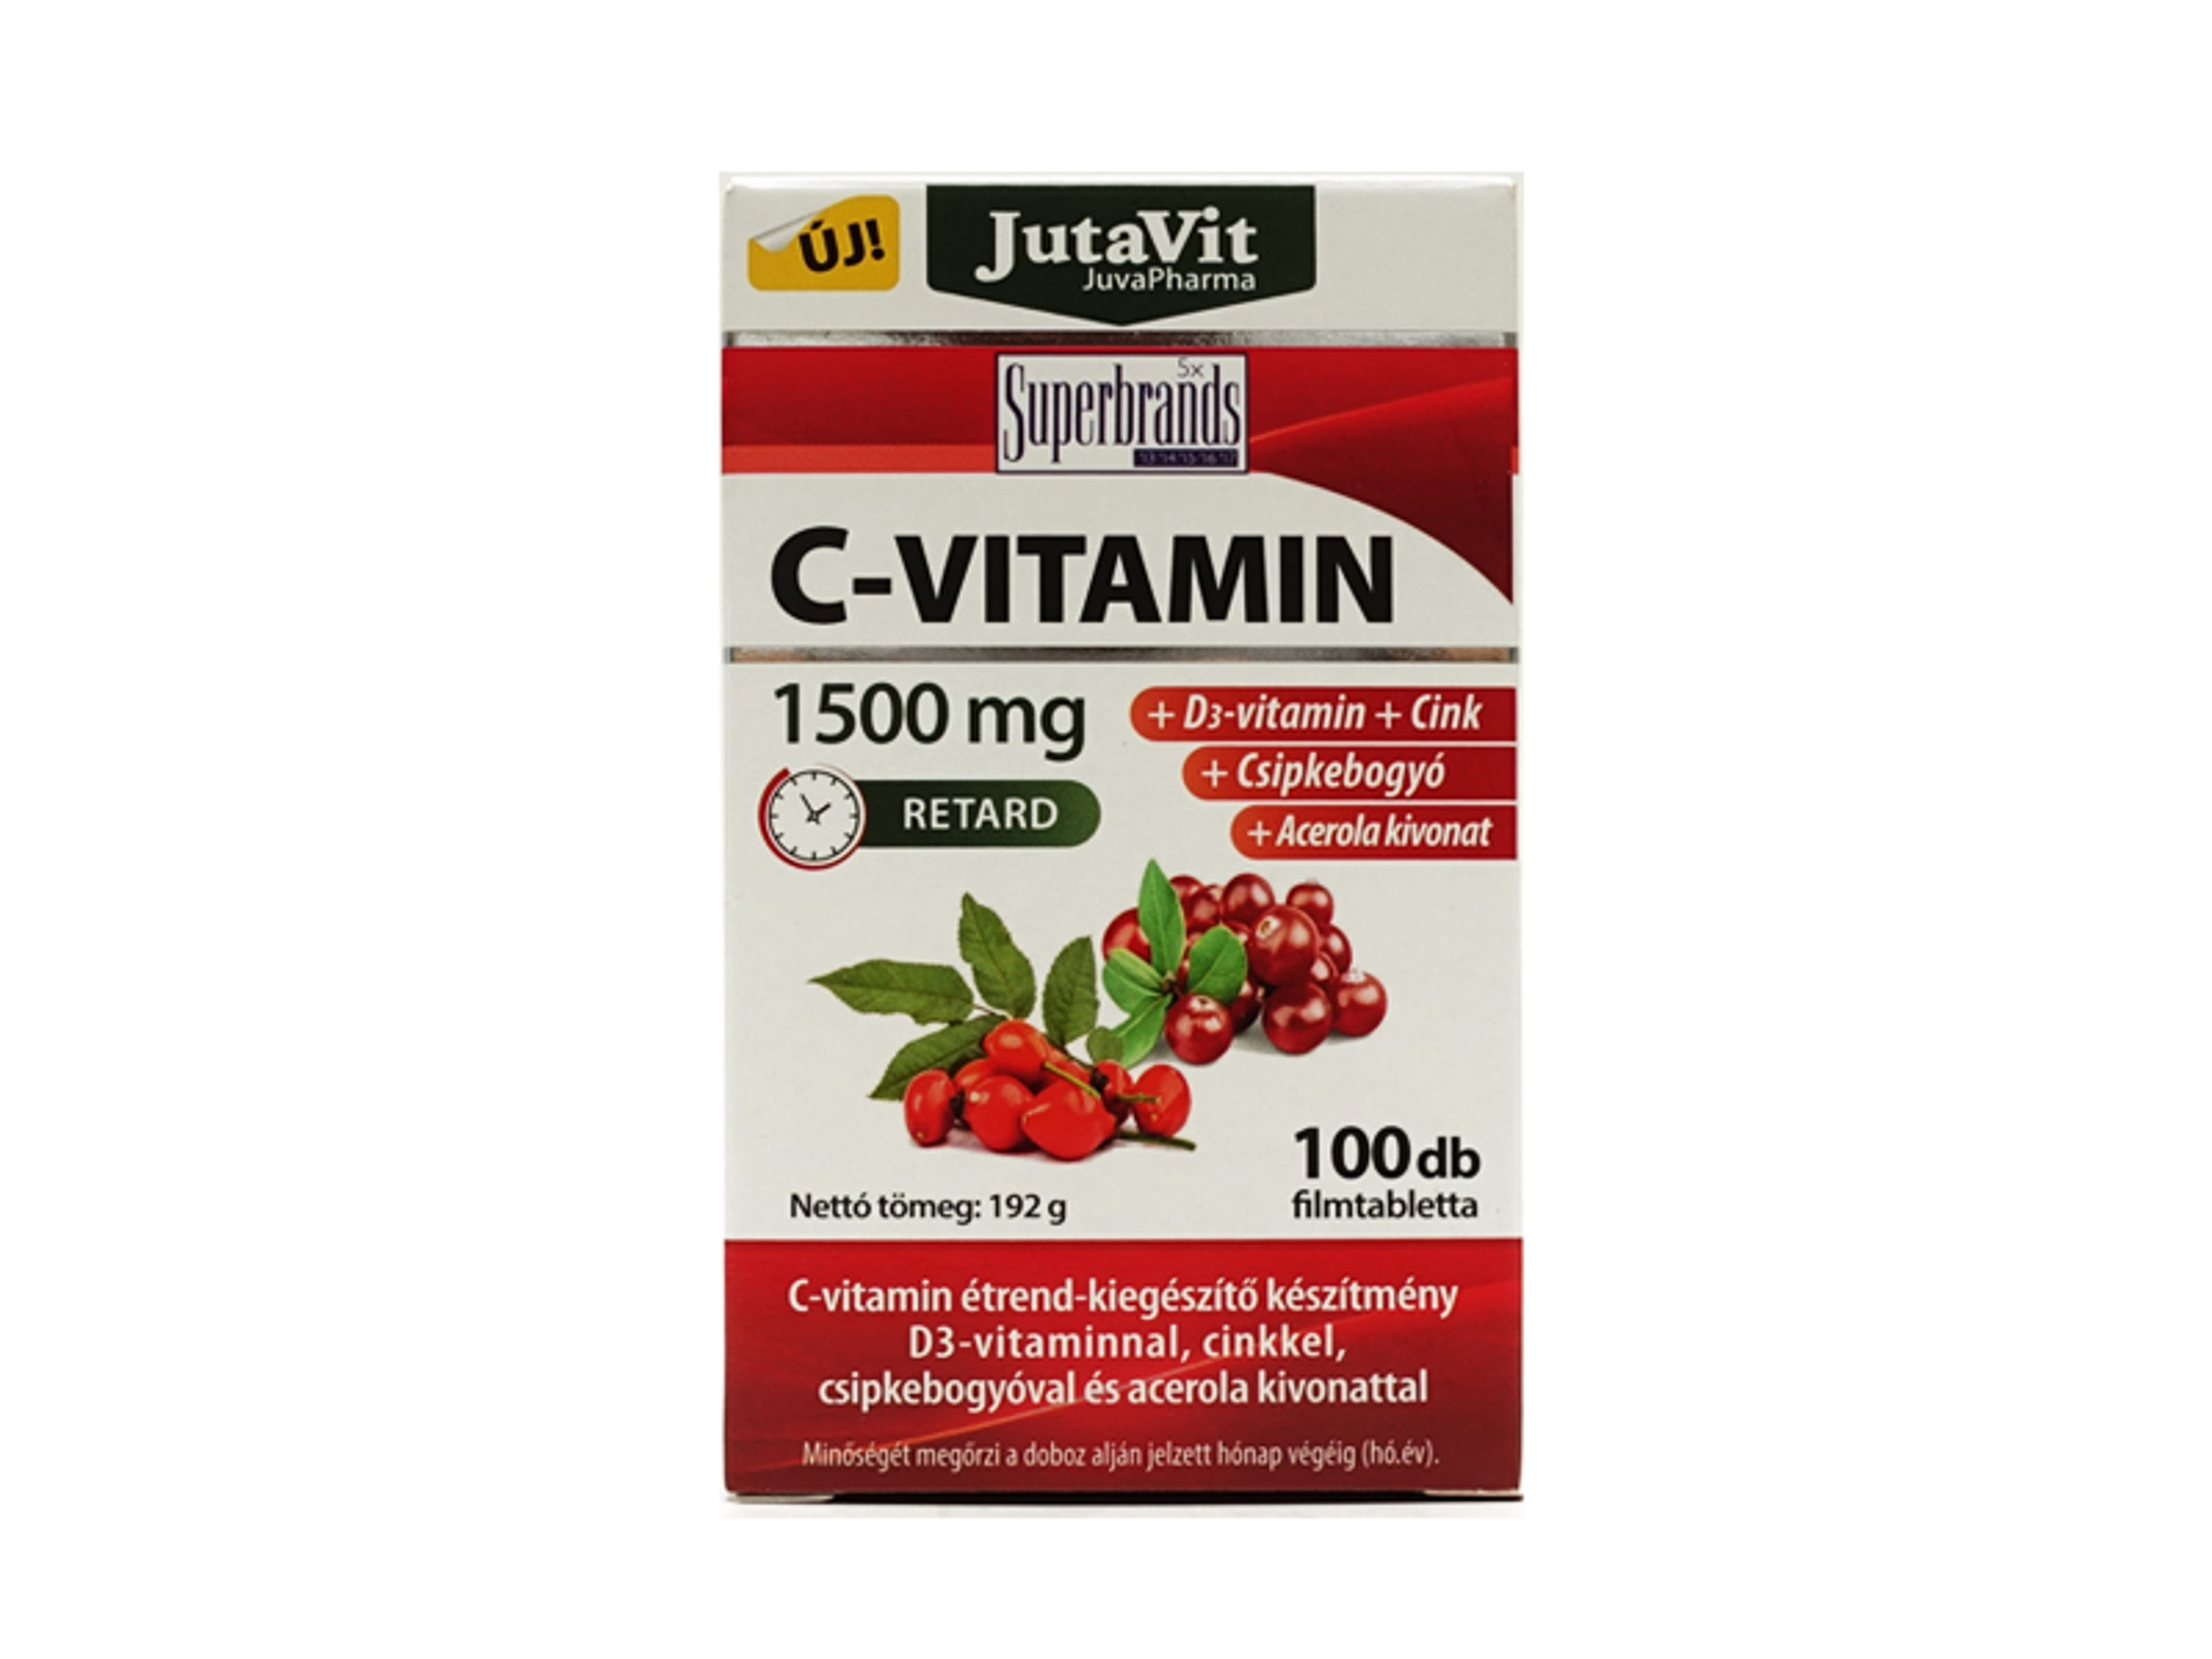 JutaVit C-Vitamin 1500mg Csipkebogyó+ Acerola+D3-Vitamin Filmtabletta - 100 db-1